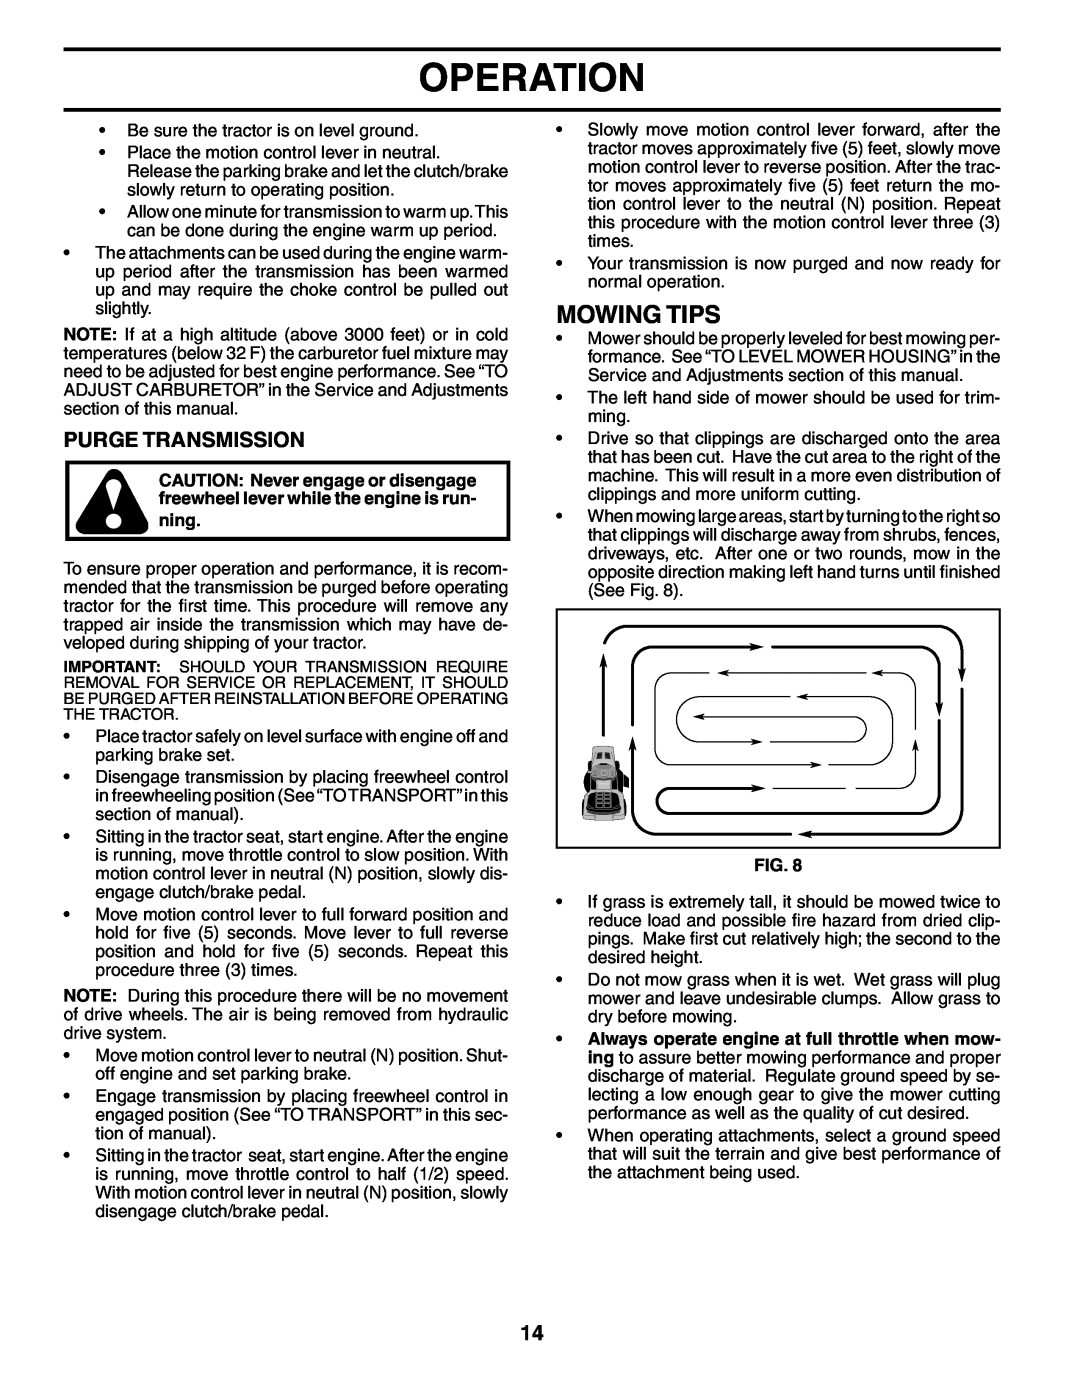 Poulan 195620 manual Mowing Tips, Purge Transmission, Operation 